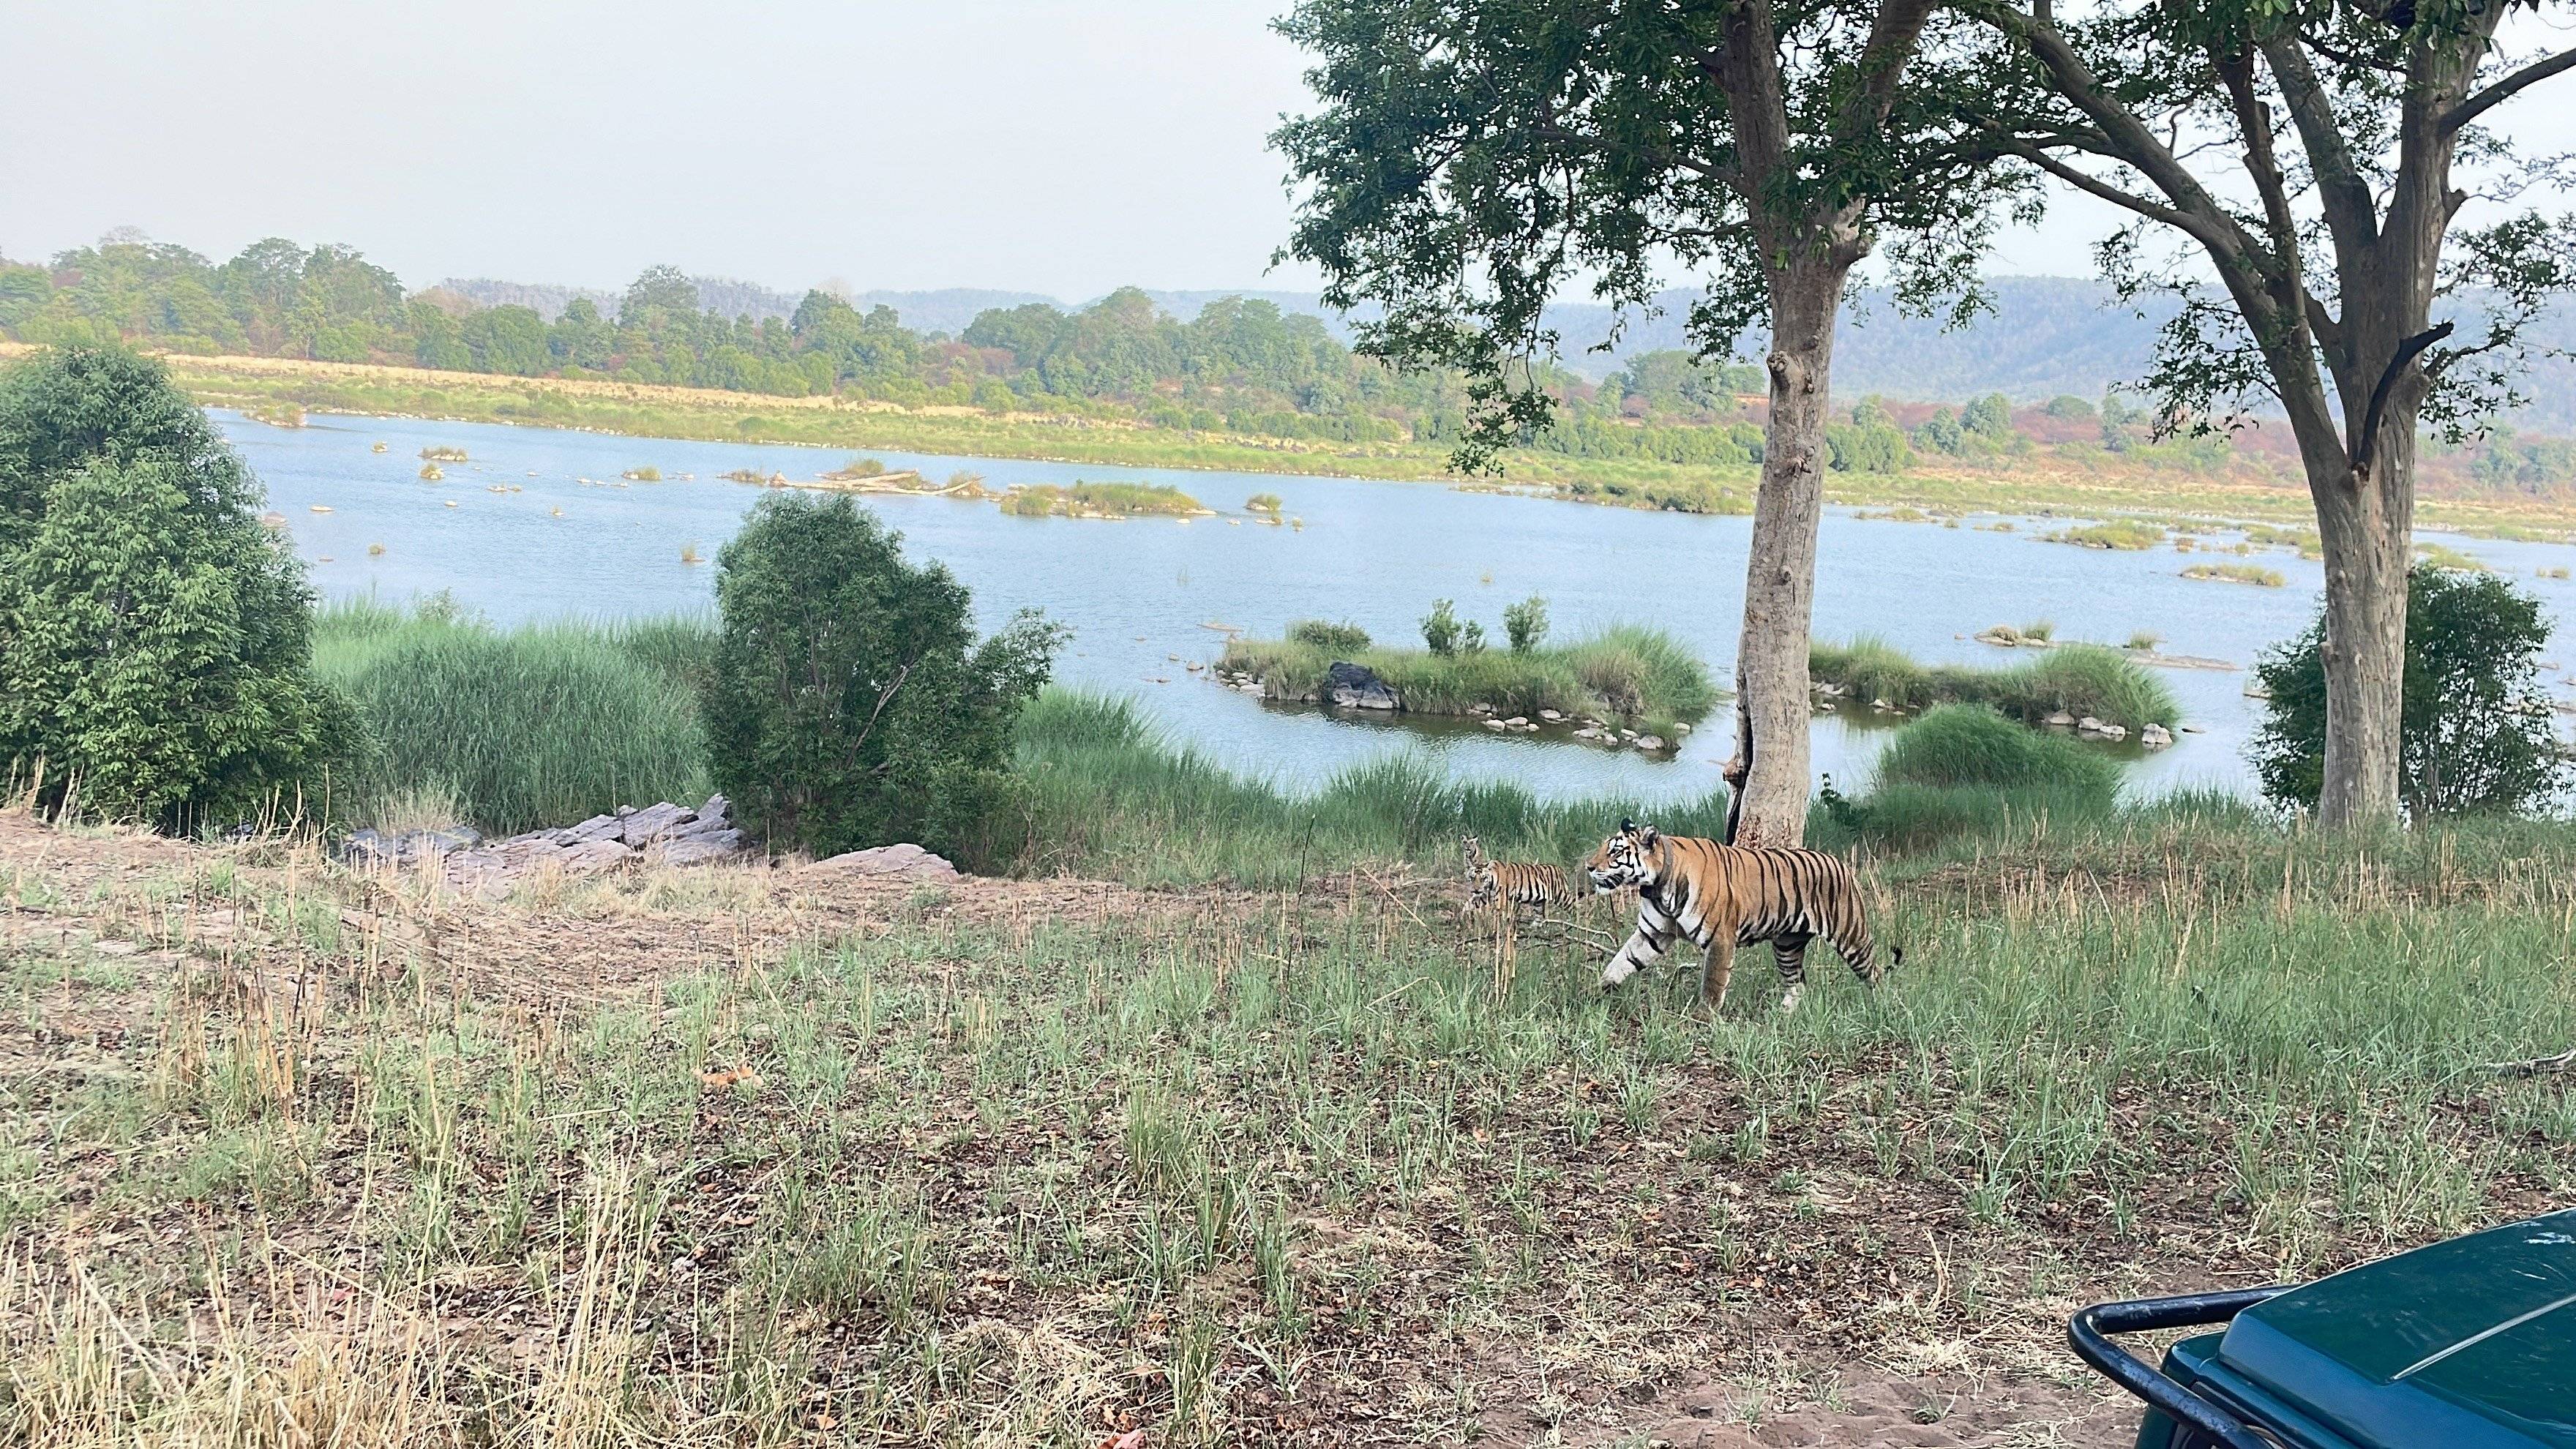 Tiger-Safari im schönen Panna Nationalpark